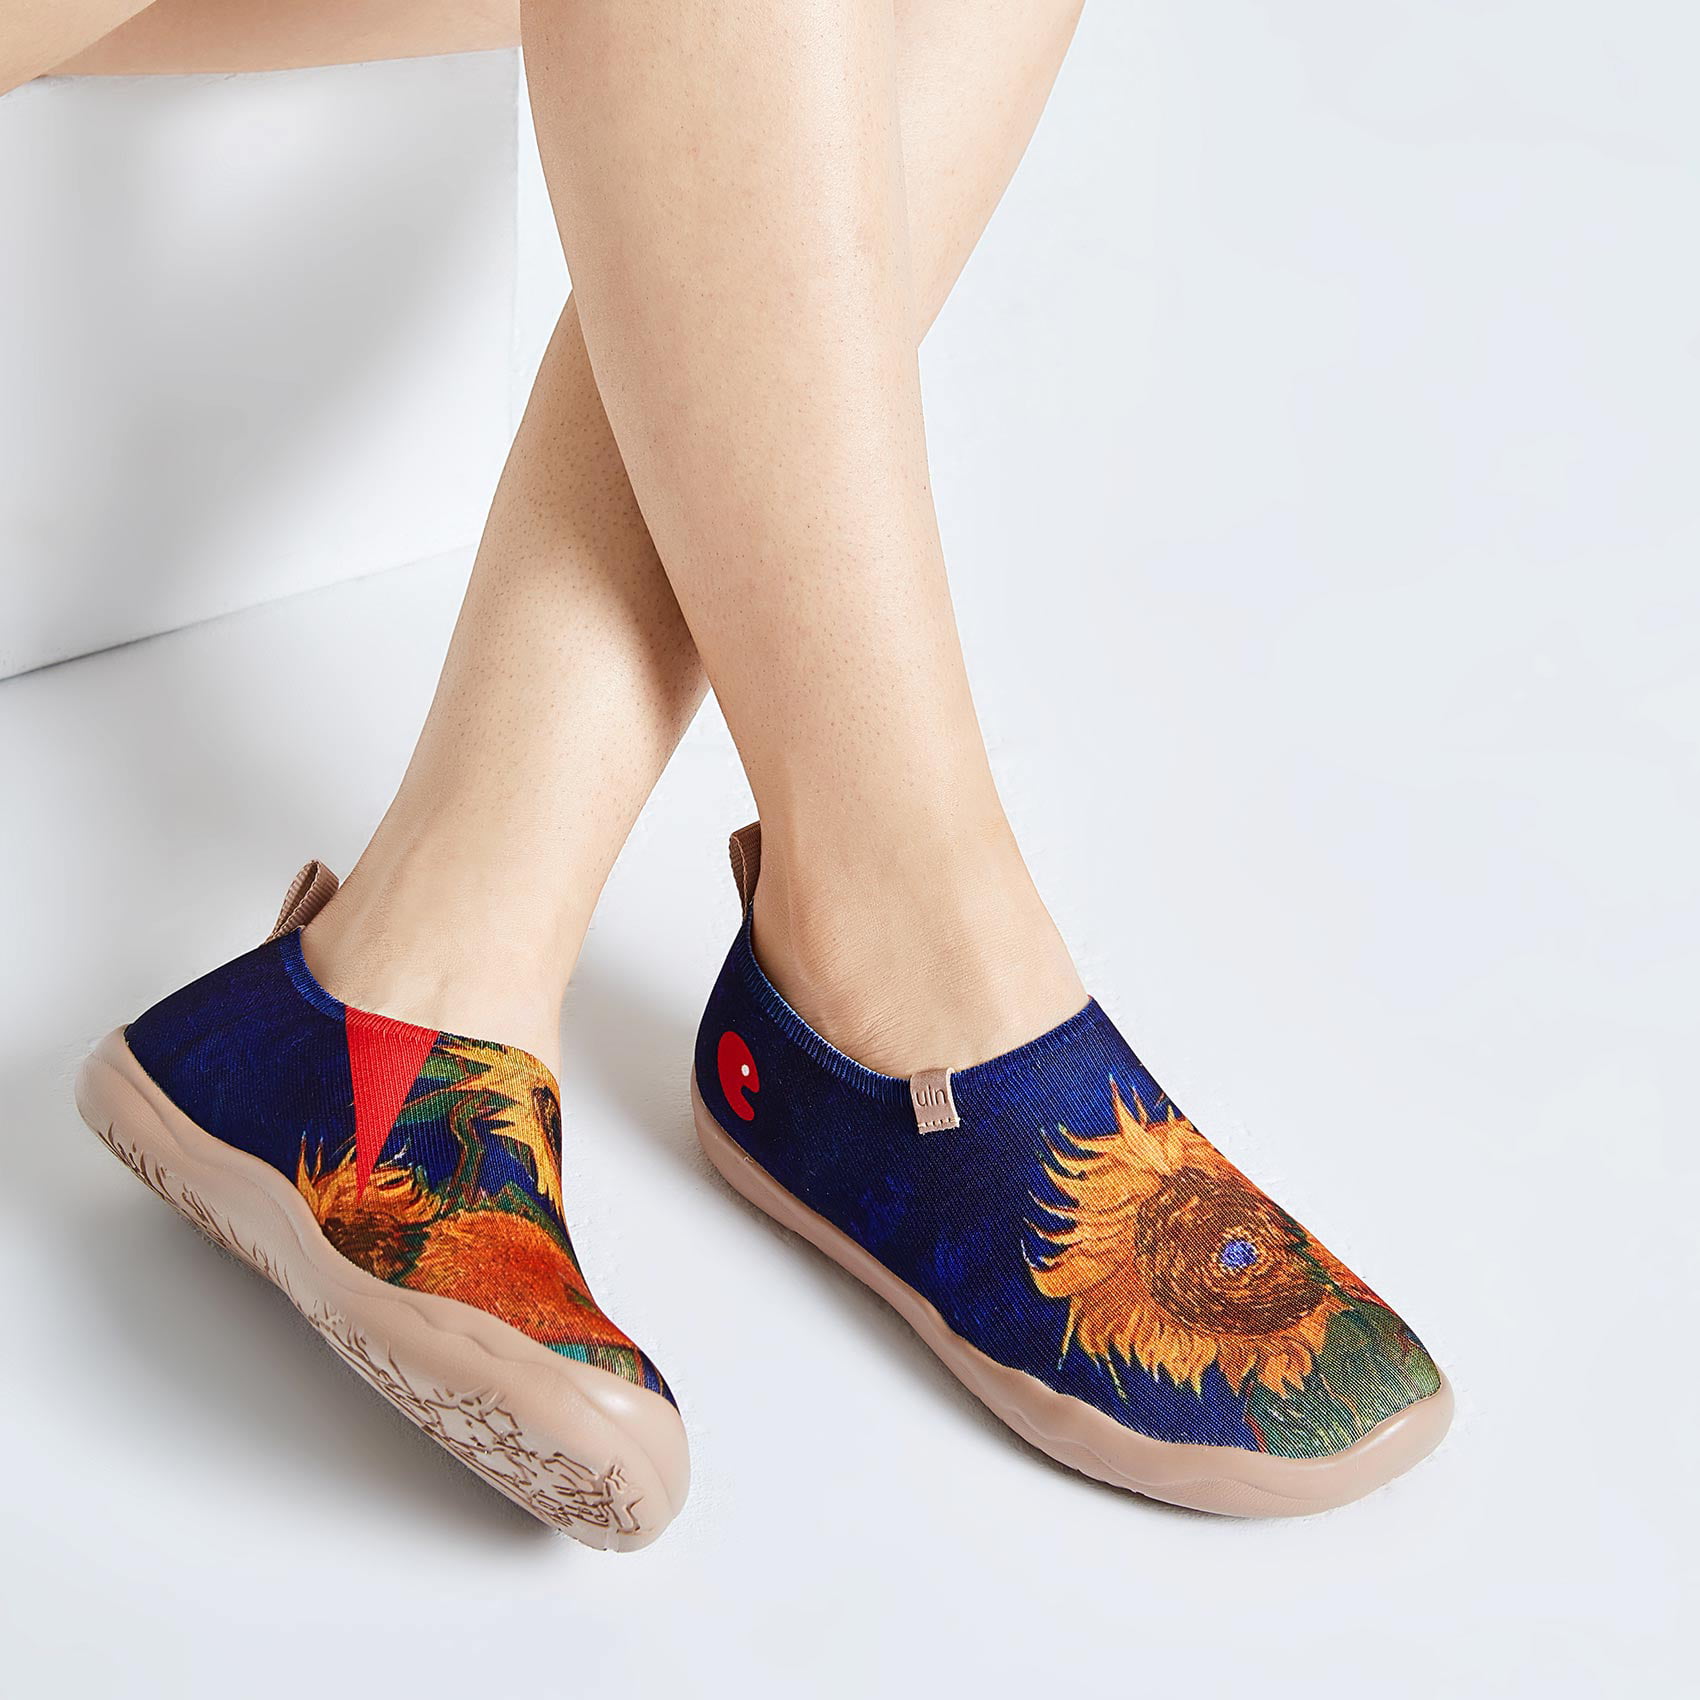 UIN Womens Flats Canvas Lightweight Slip Ons Sneakers Walking Casual Art Painted Travel Shoes Secret Garden